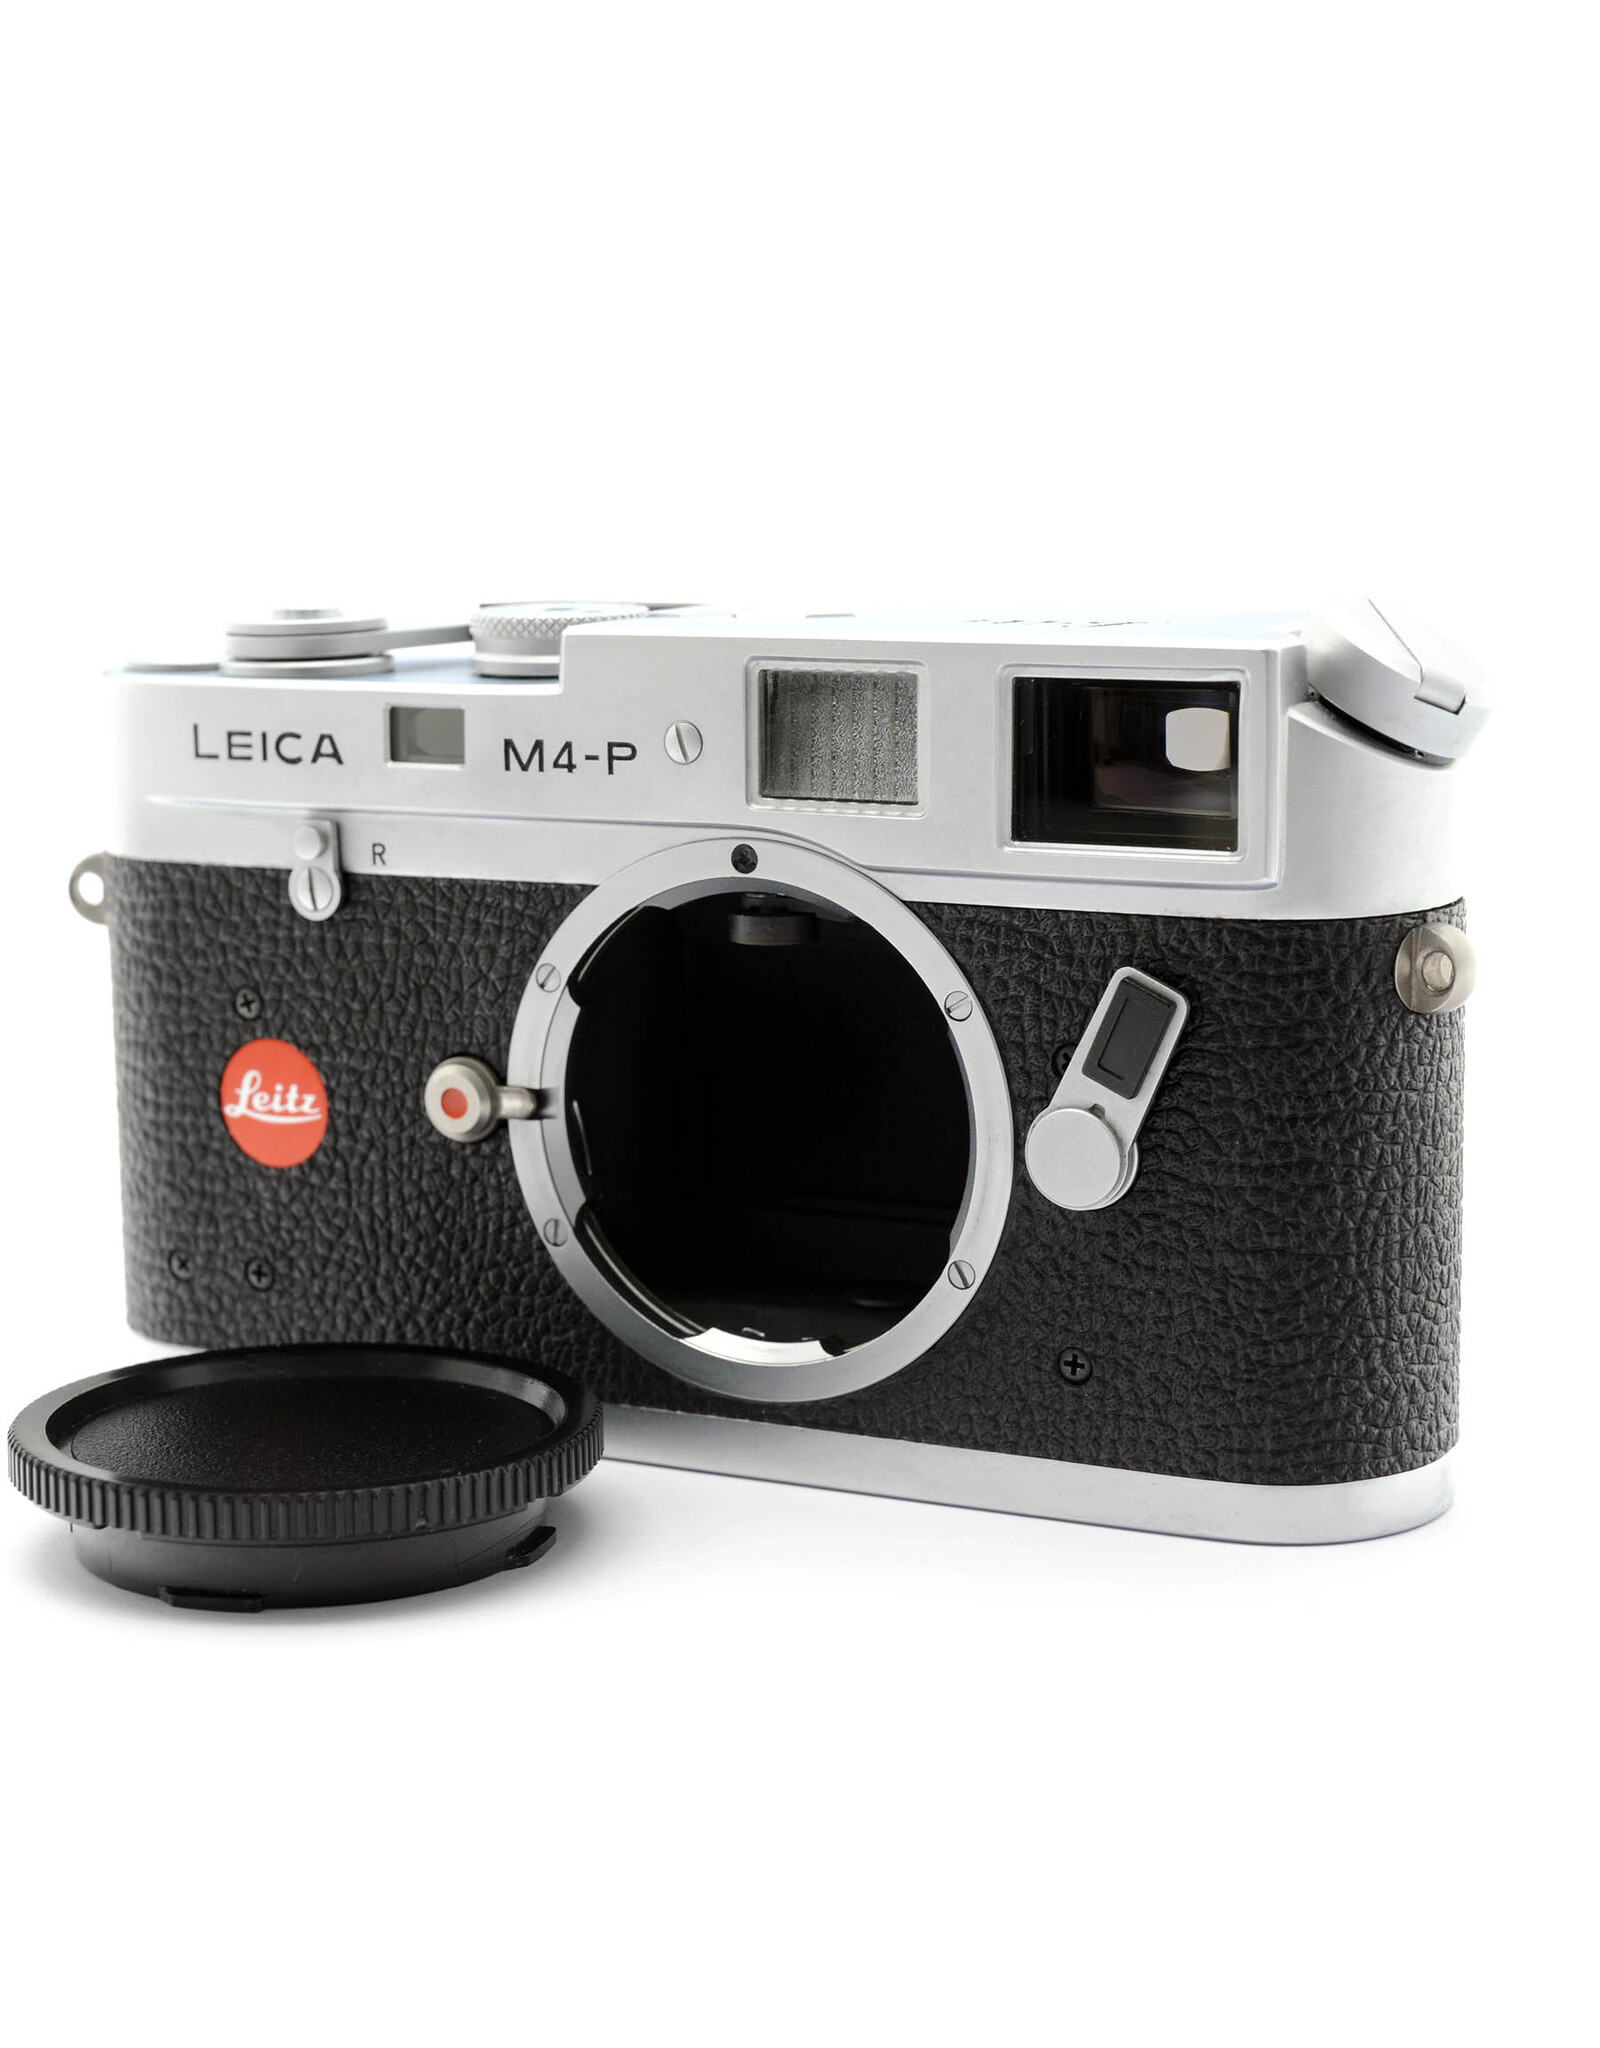 Leica M4-P Chrome 70 years Anniversay (L197) A4032101 - Aperture UK